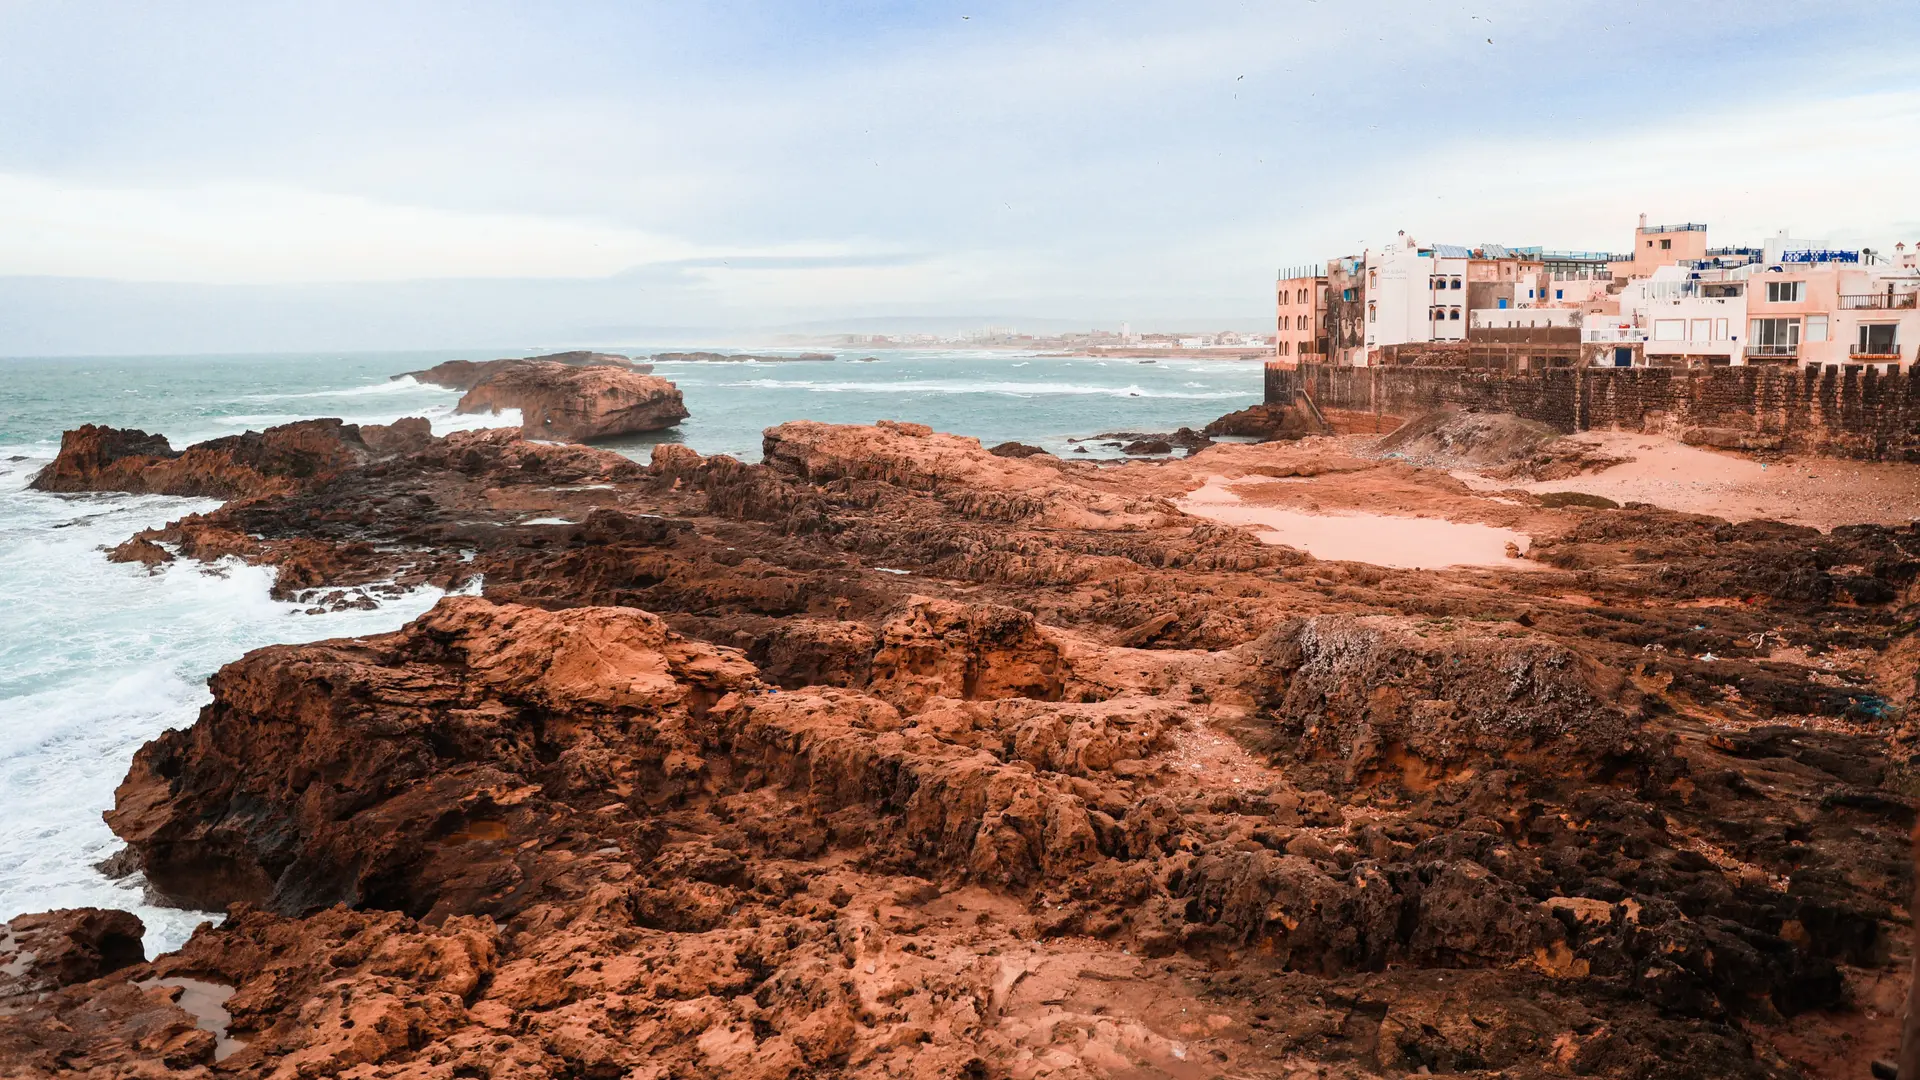 A rocky coast with the ocean slamming against the orange rocks.